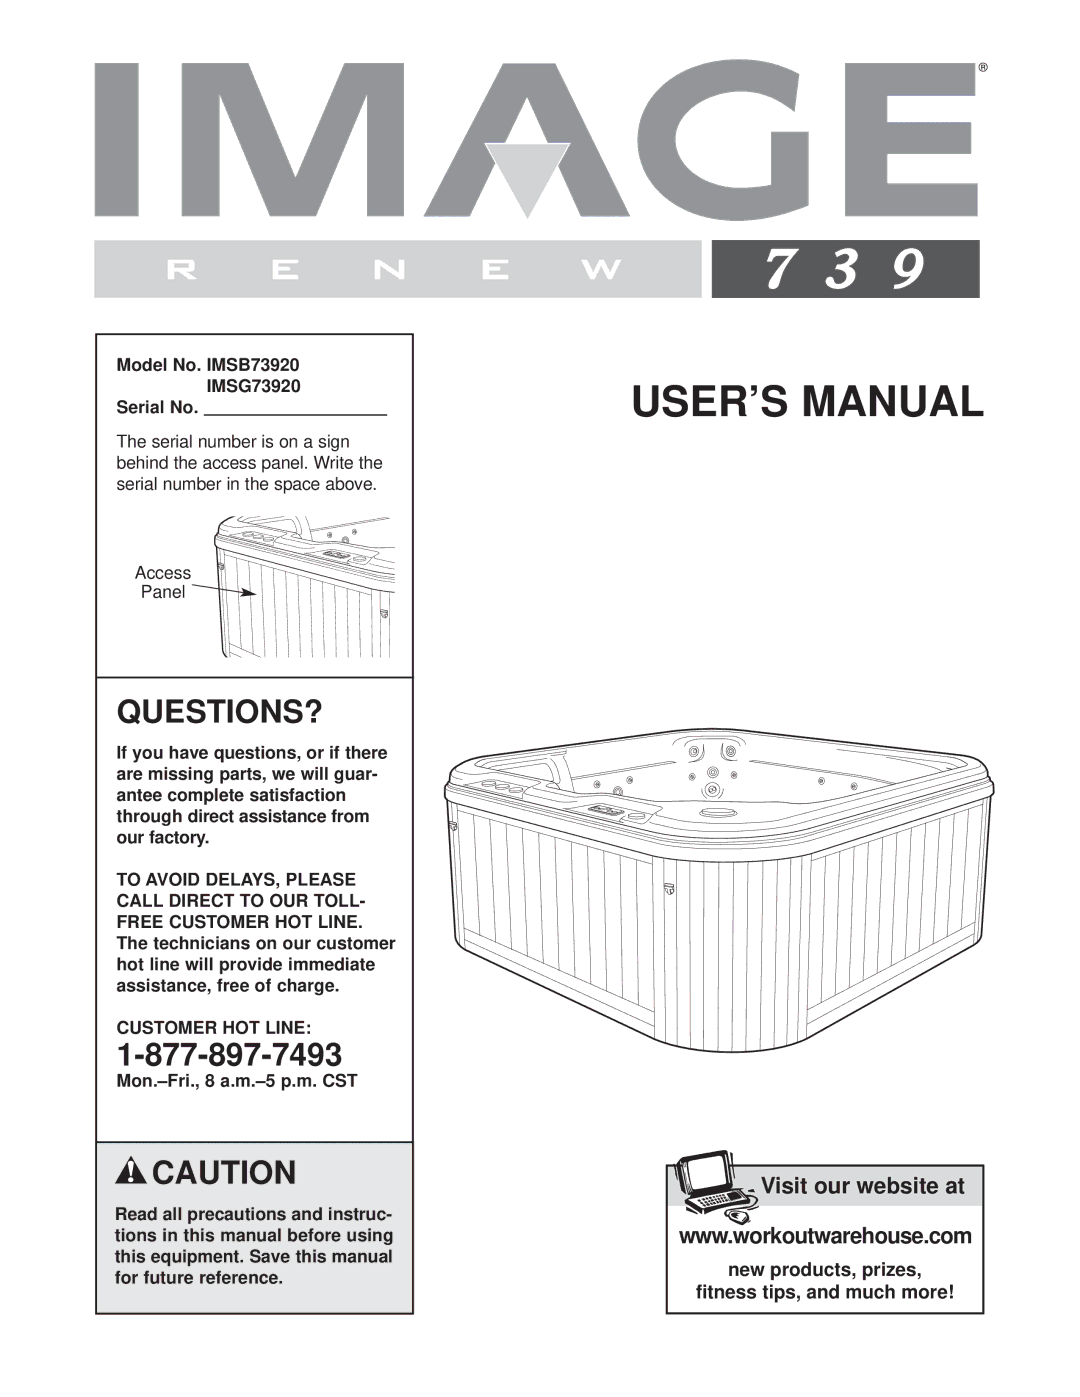 Image user manual Model No. IMSB73920 IMSG73920 Serial No, Customer HOT Line 